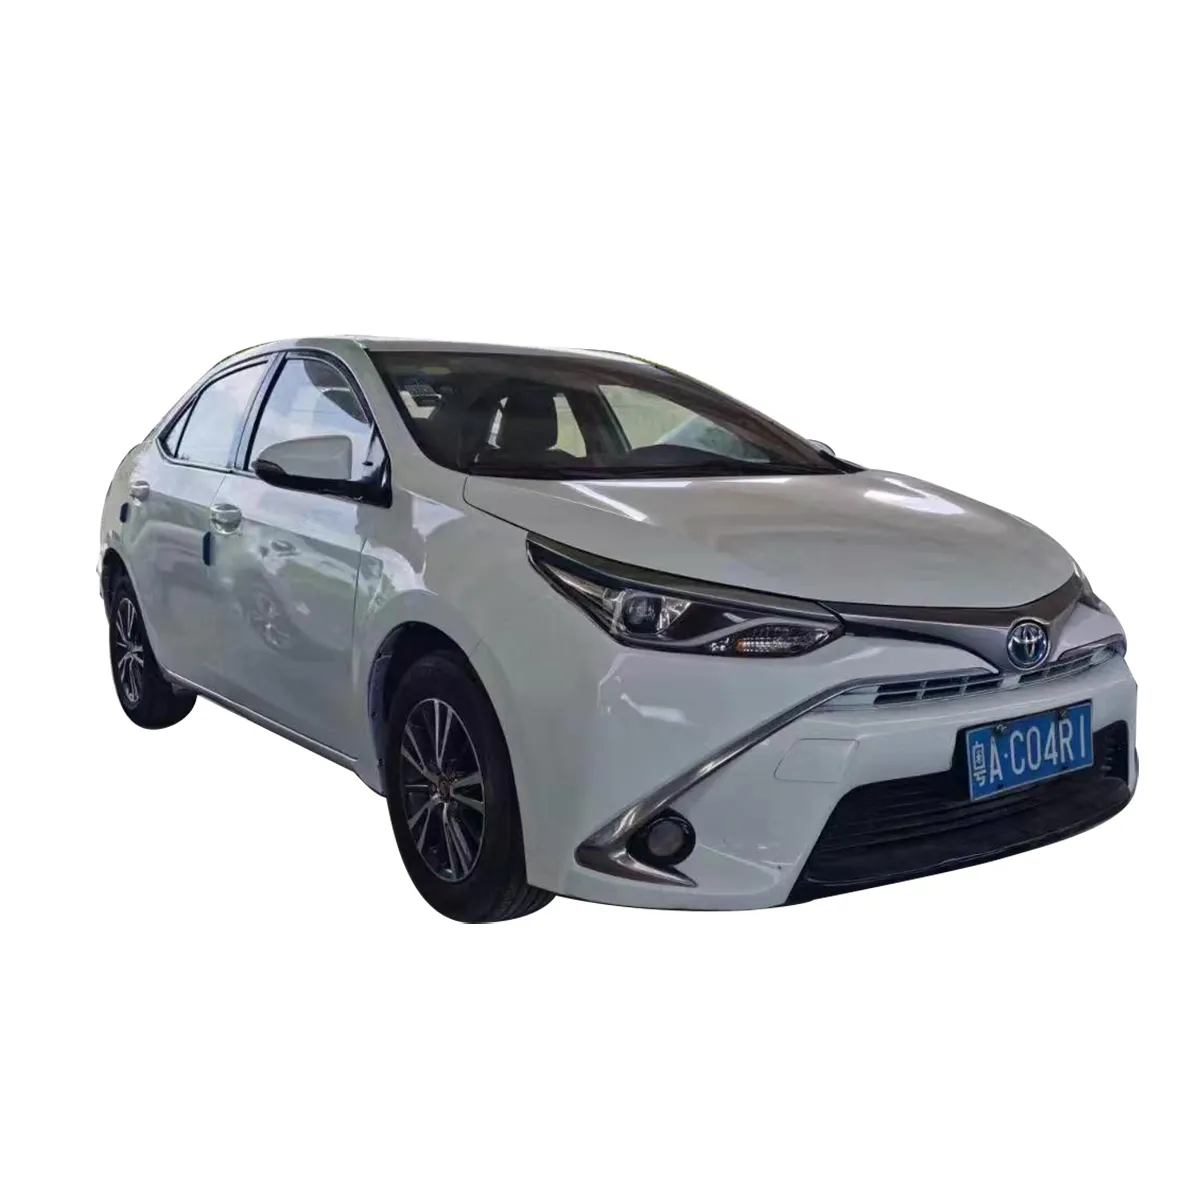 Mobil bekas otomatis hibrida, mobil murah Toyota Levin 2015 T 2020-2018 185